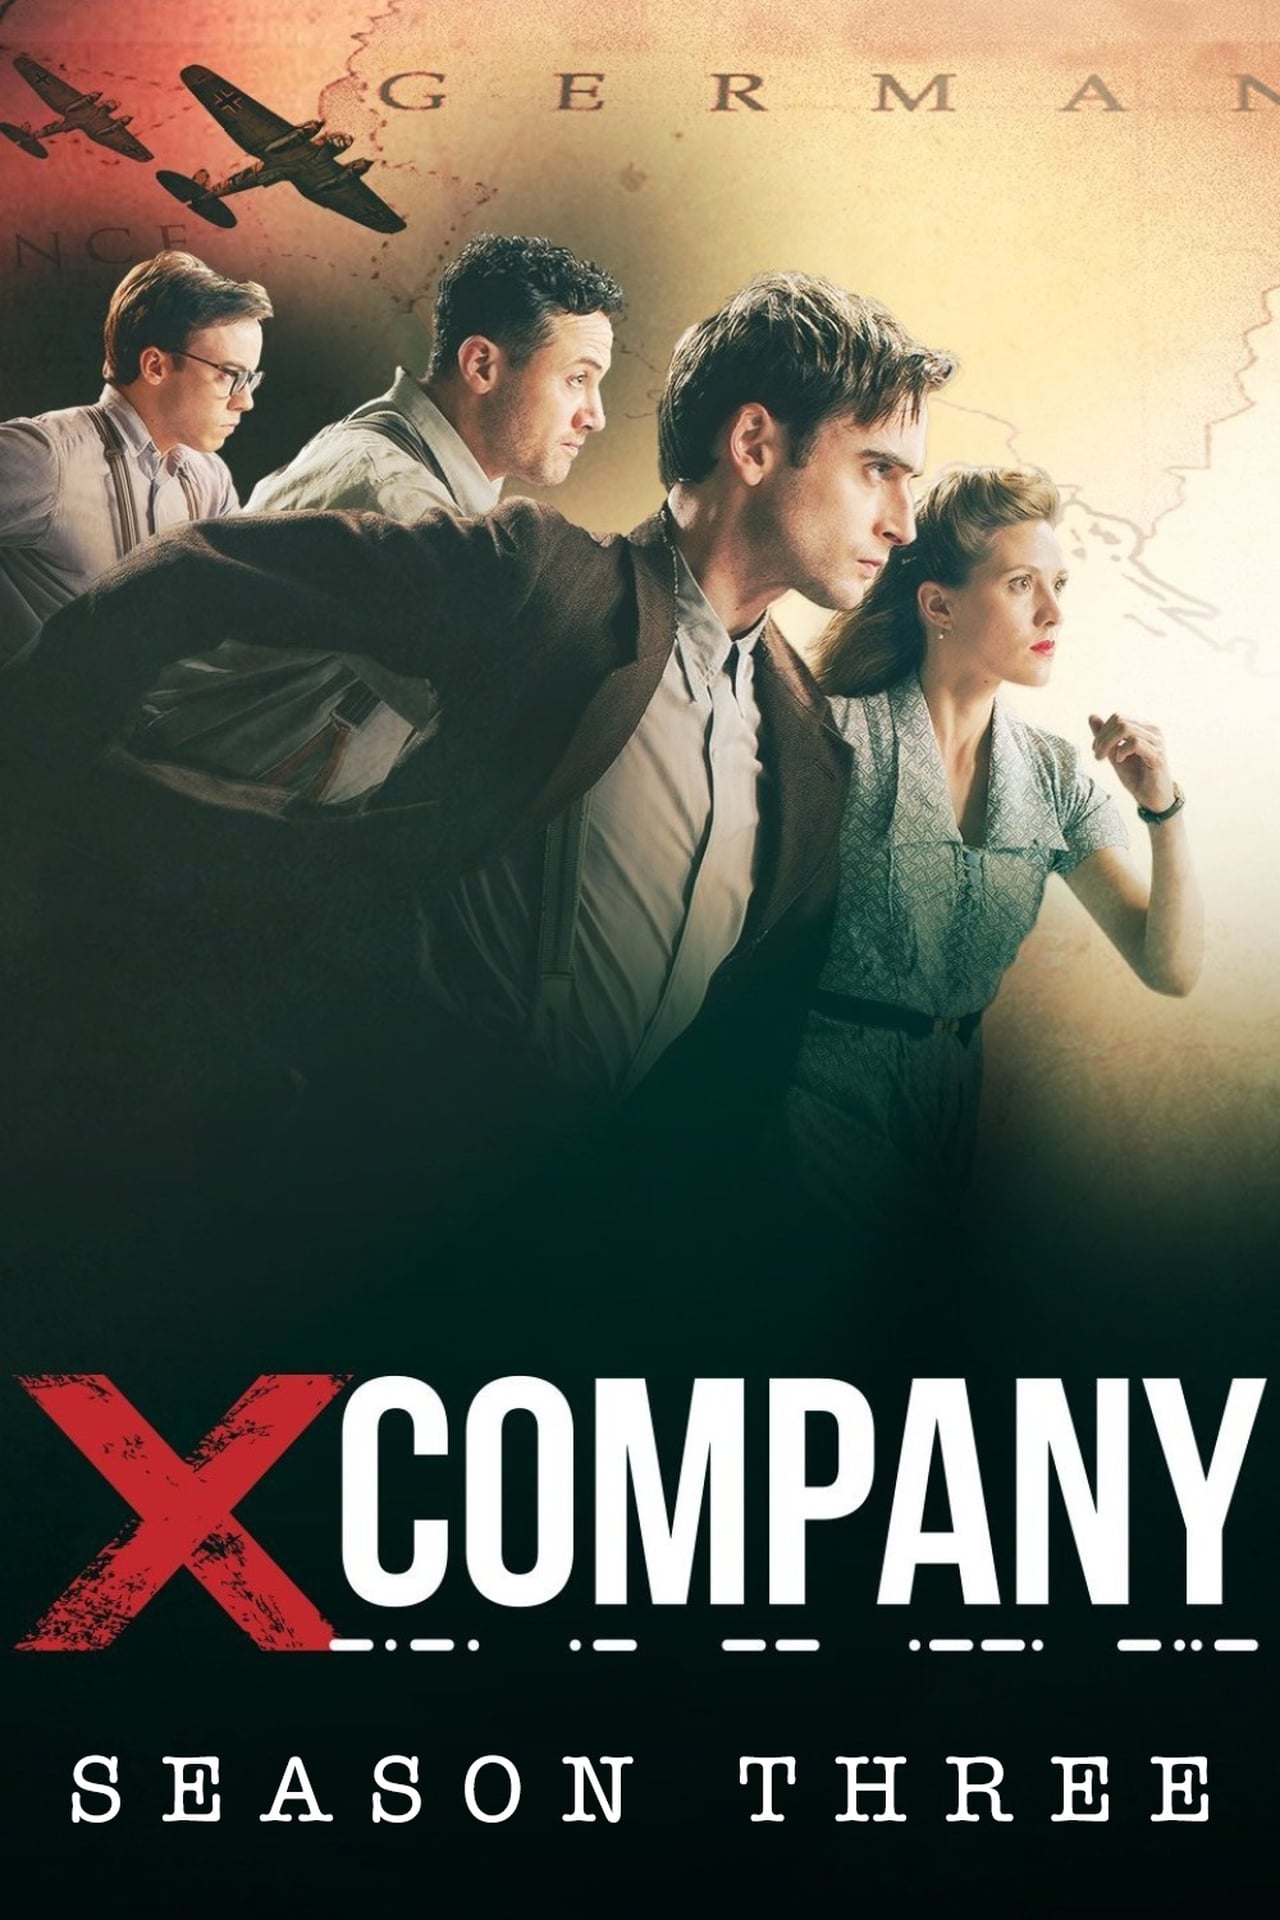 Image X Company